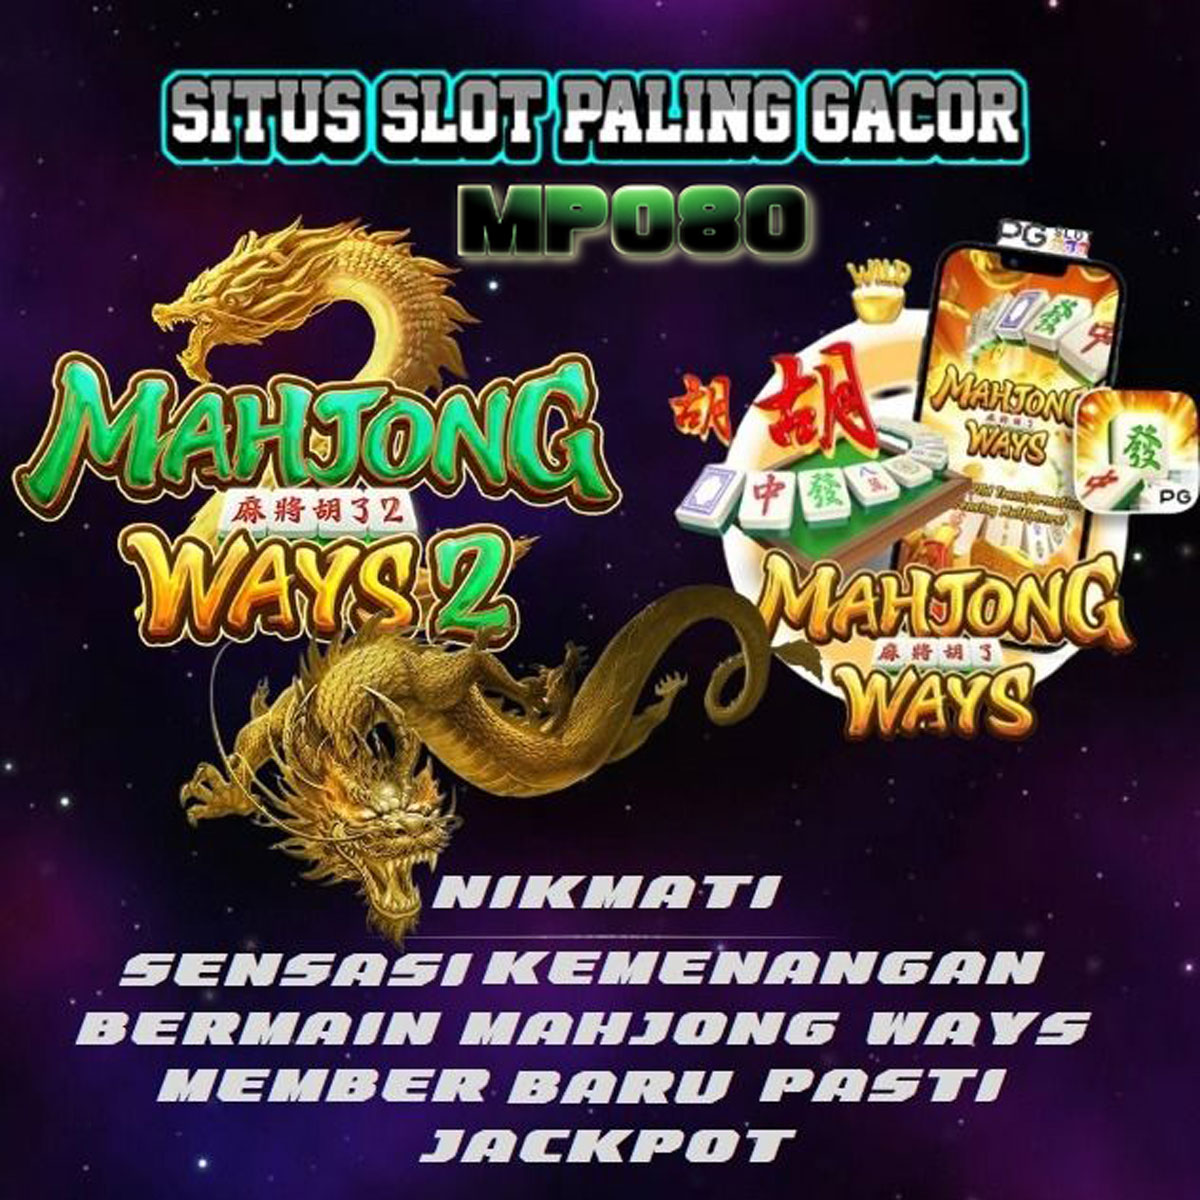 MPO80 situs jackpot khusus Mahjong Ways